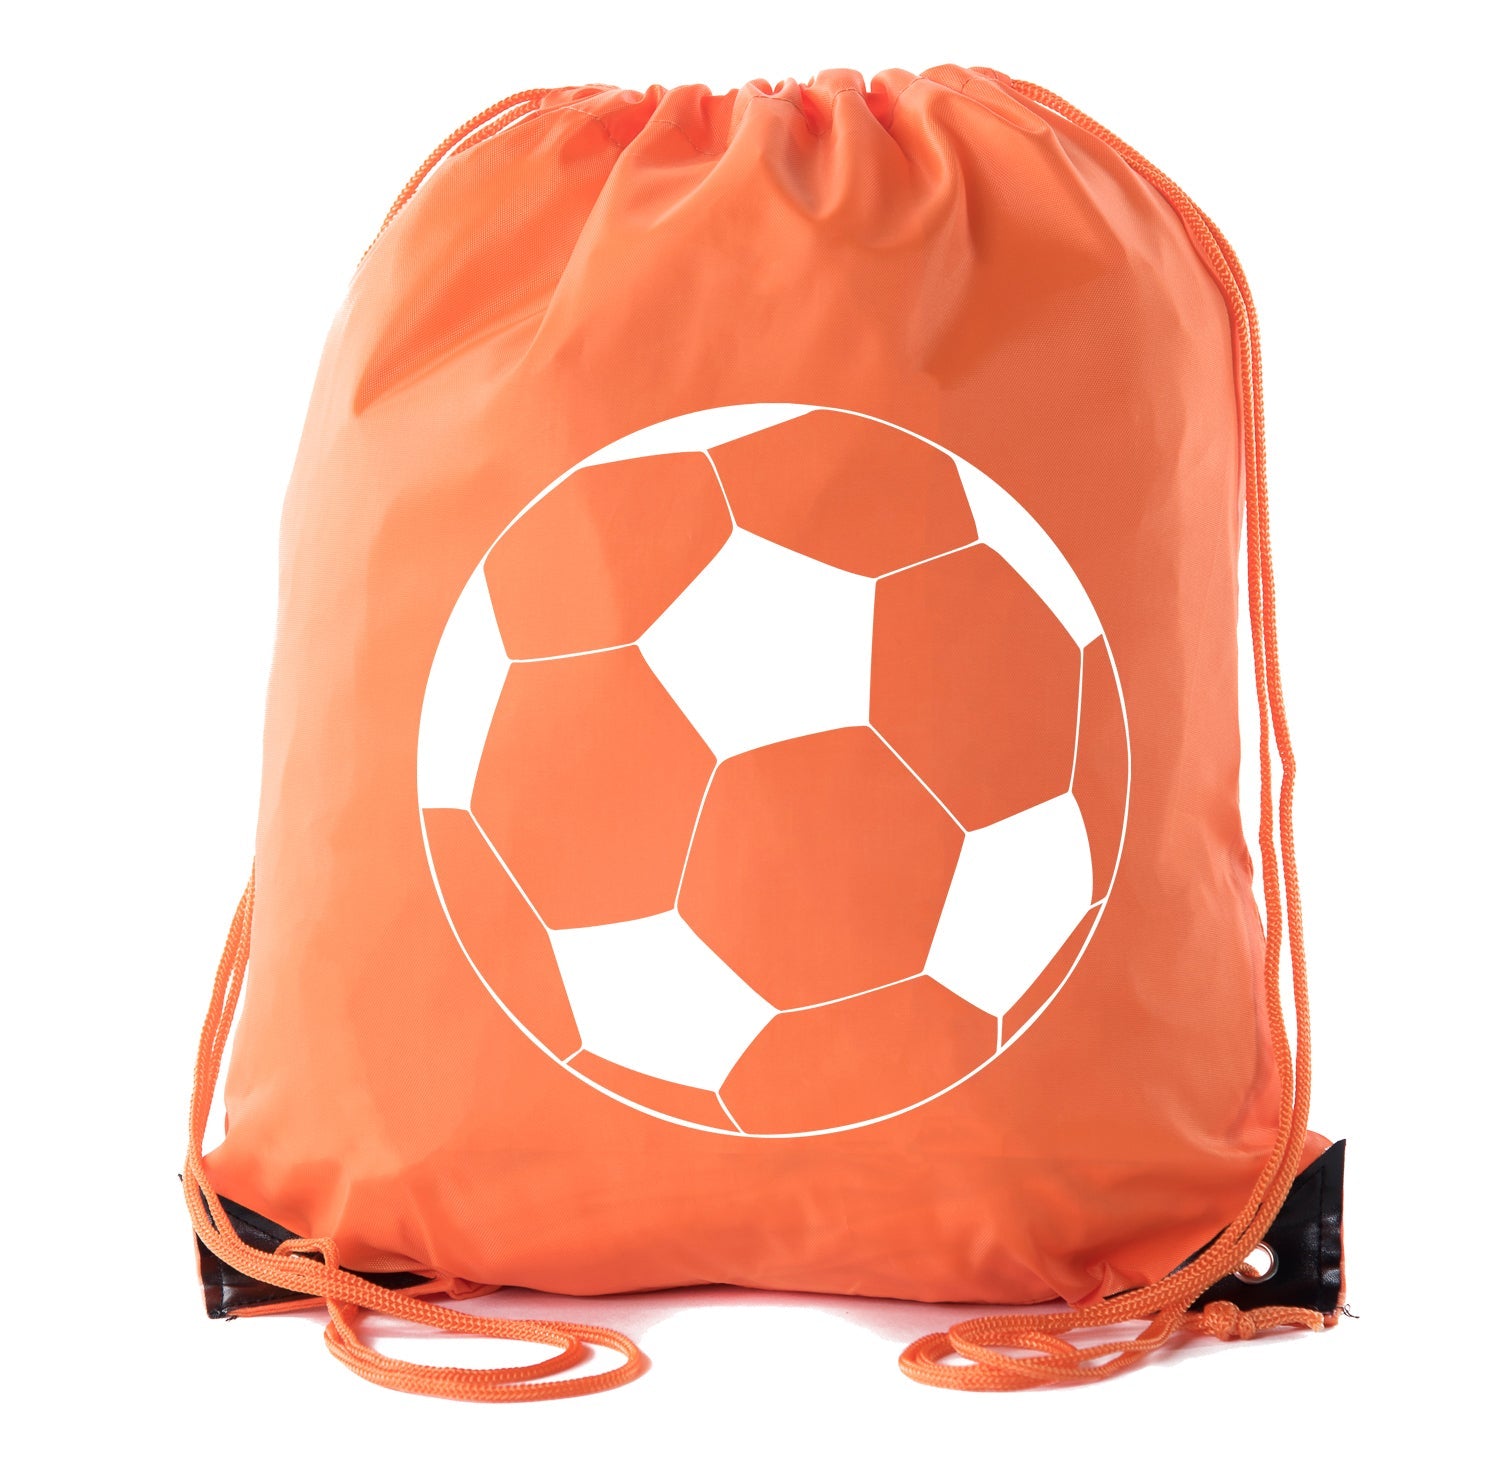 Athletico Drawstring Soccer Bag Blue